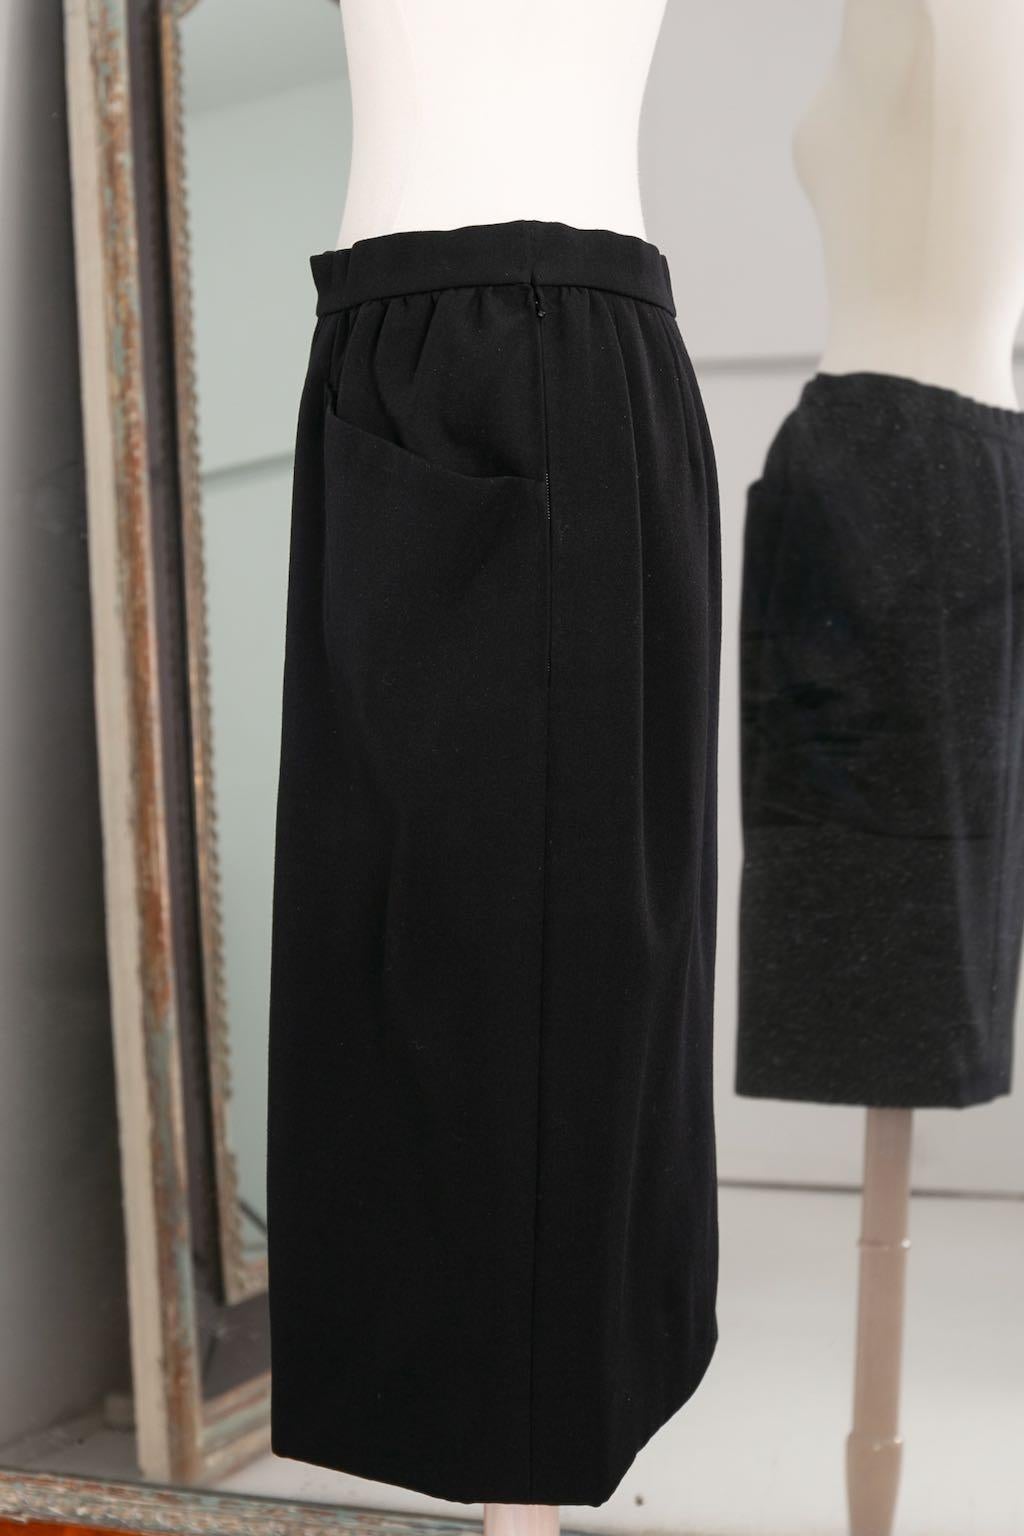 Yves Saint Laurent Haute Couture Black Skirt and Jacket Set, circa 1981/1982 4